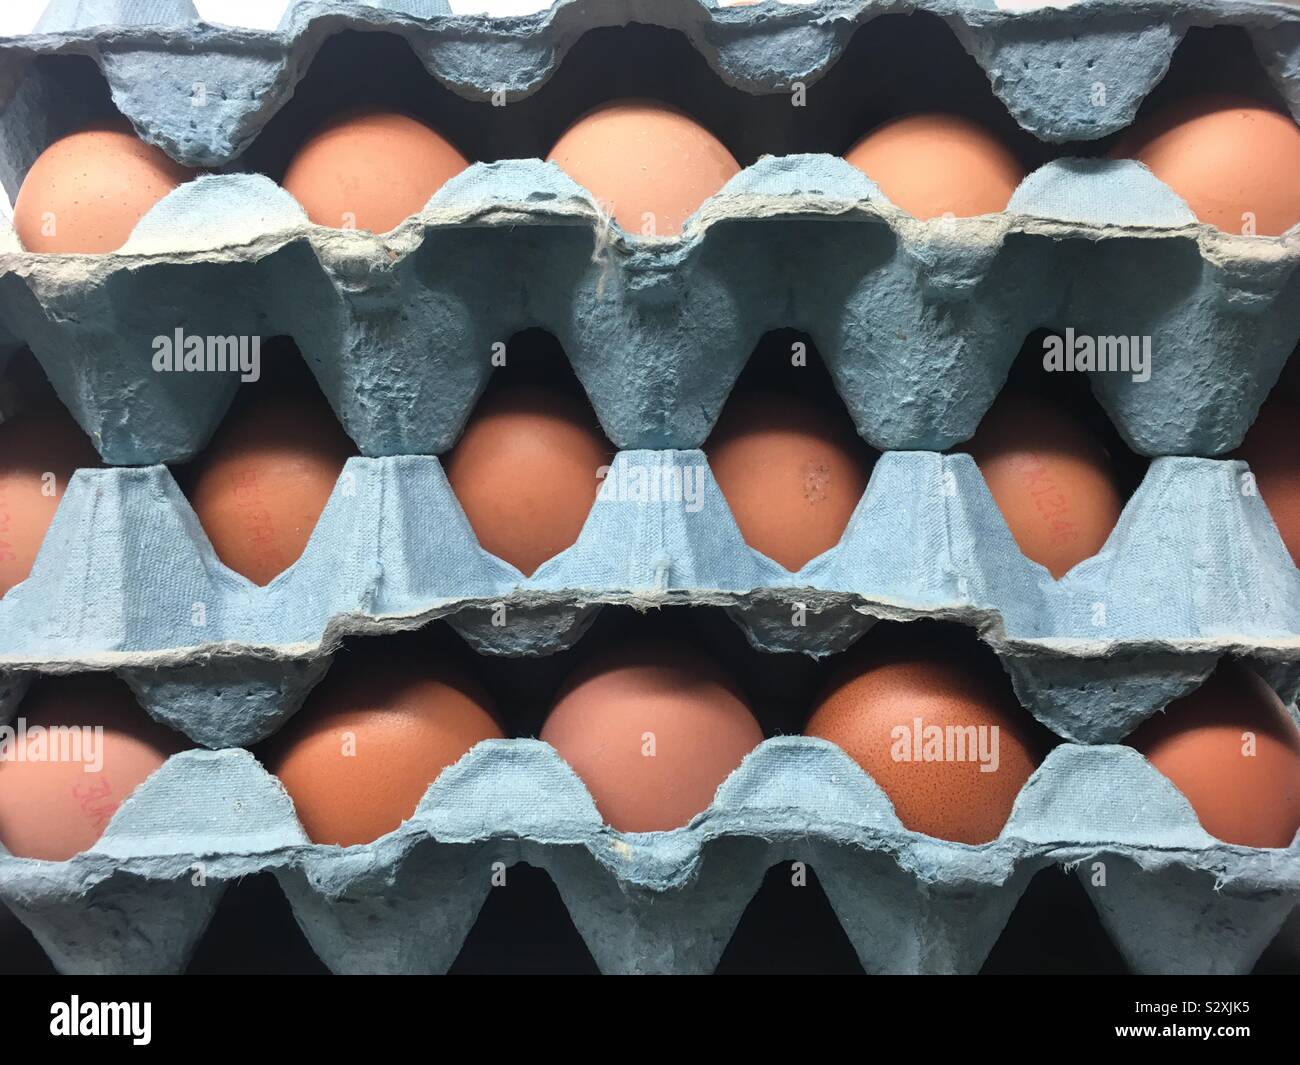 Crates of hens eggs Stock Photo